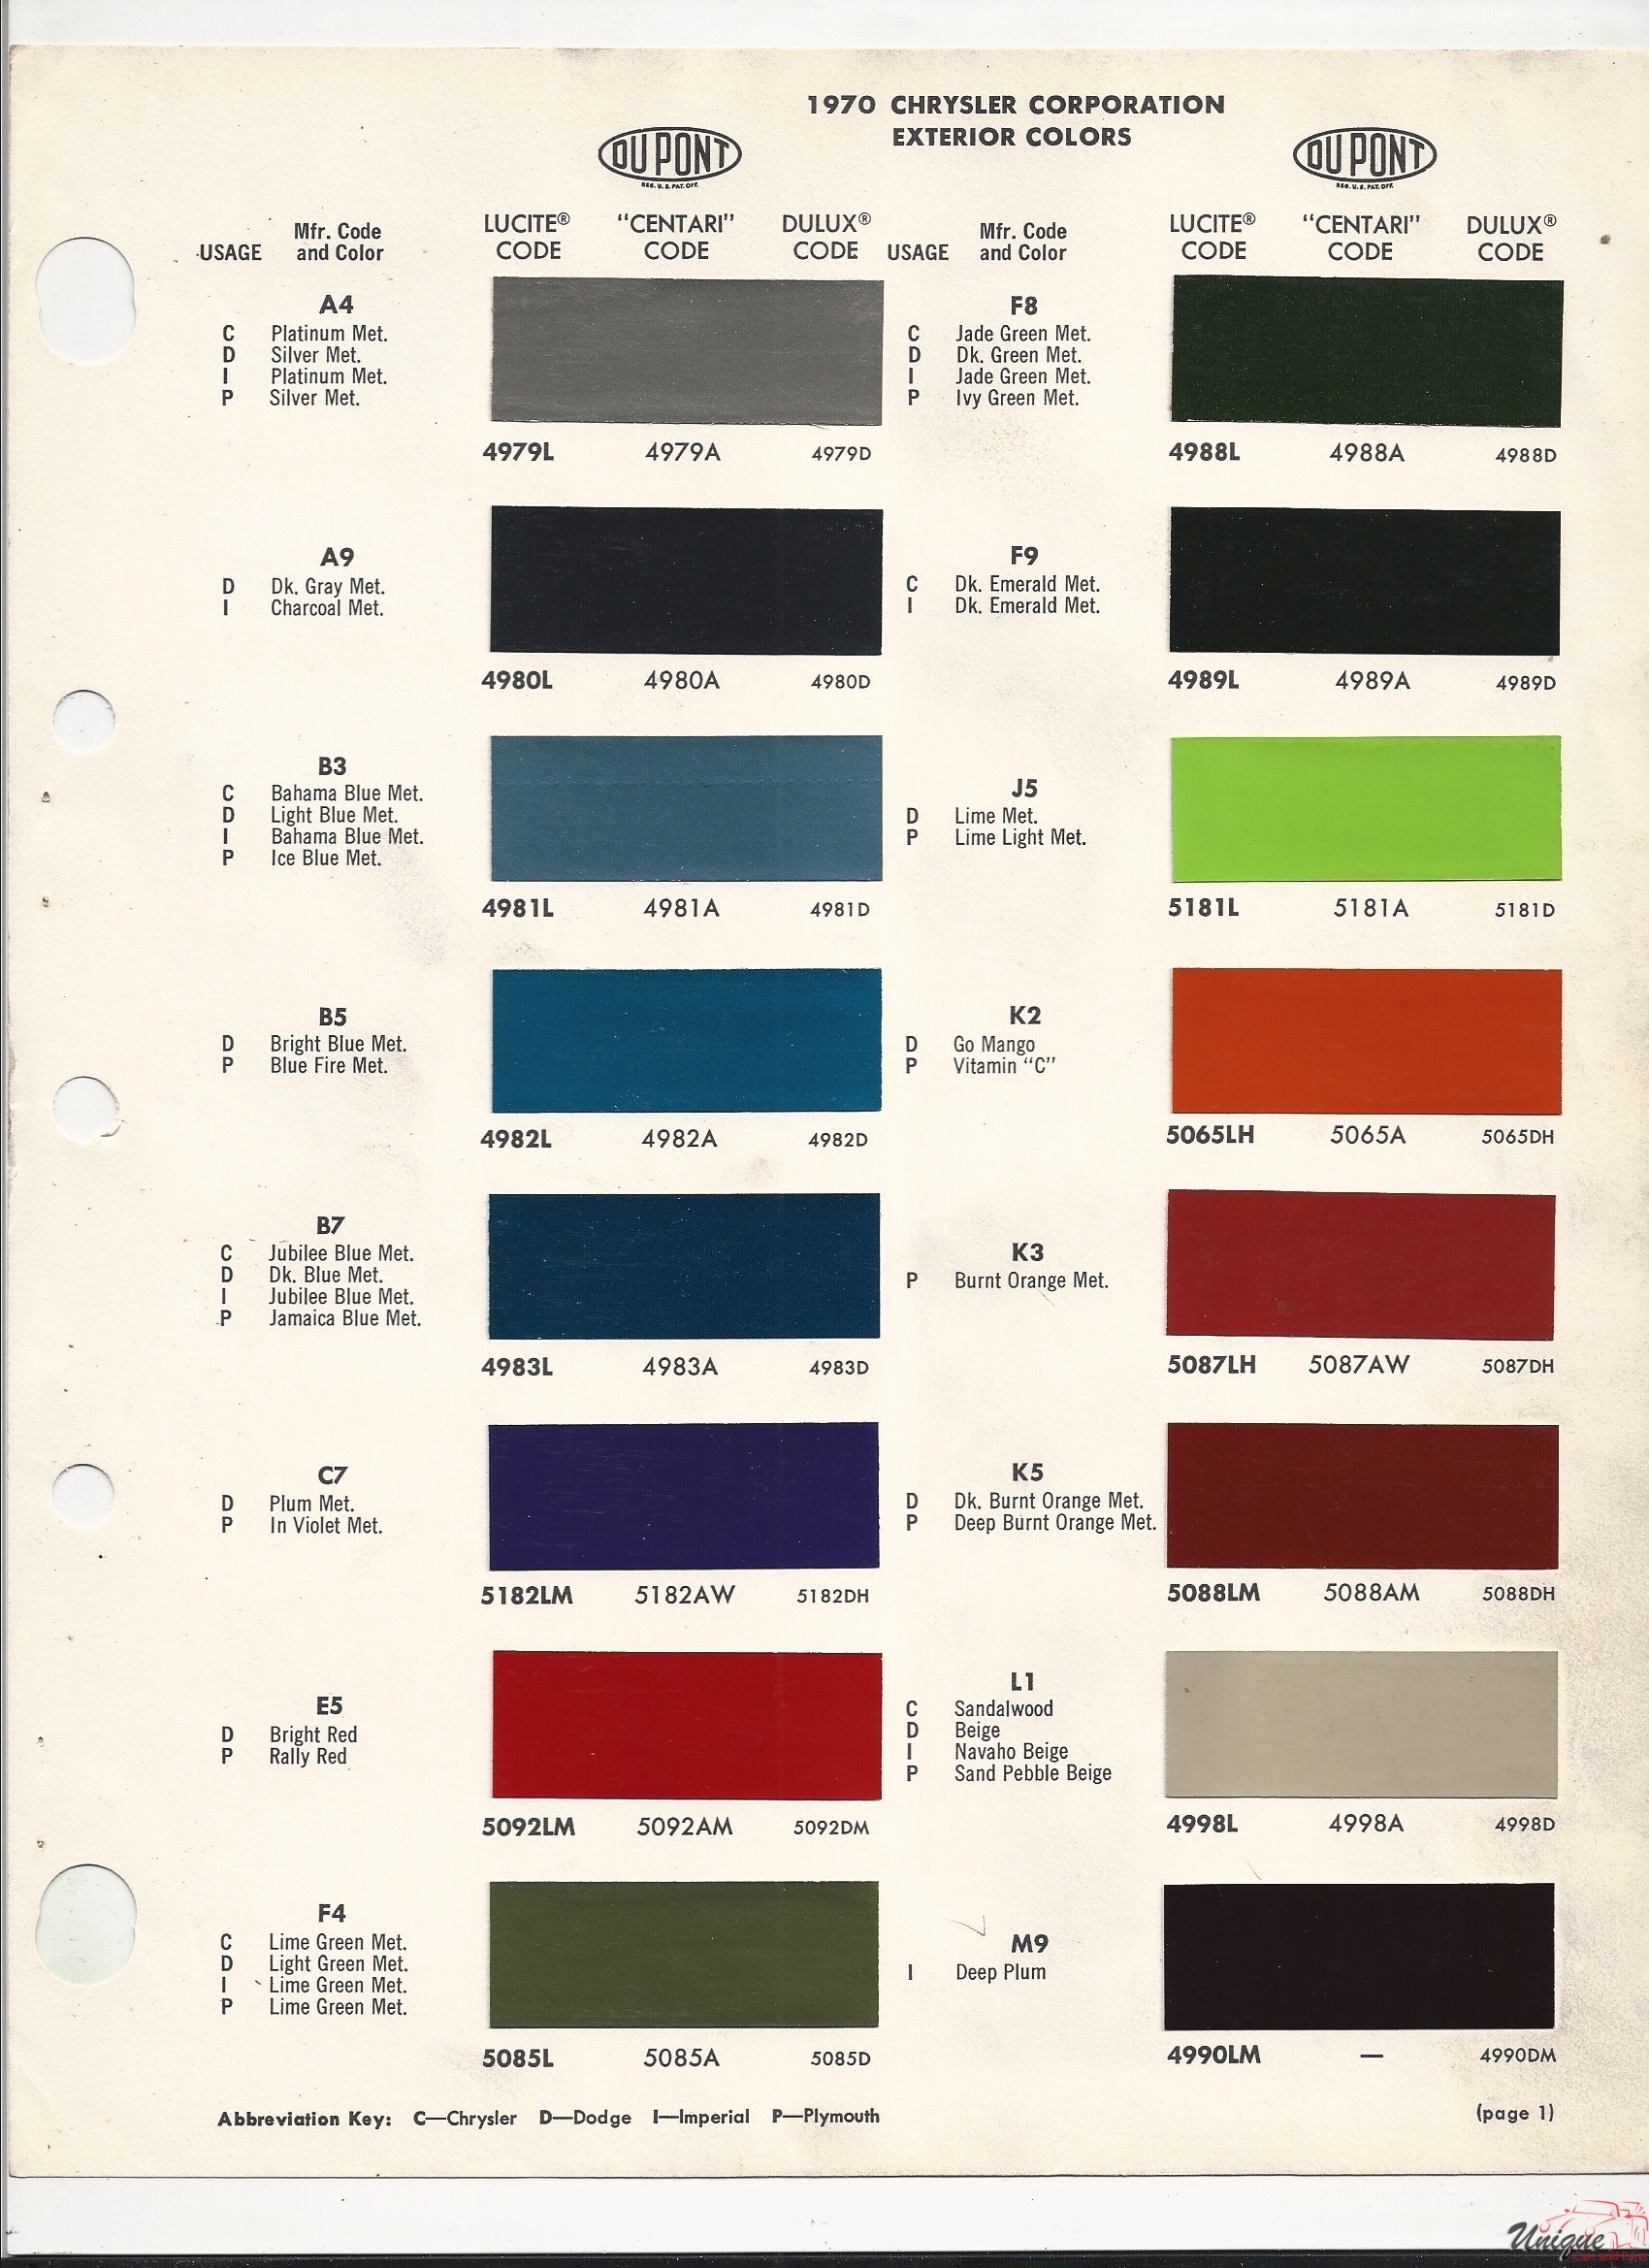 1970 Chrysler Paint Charts